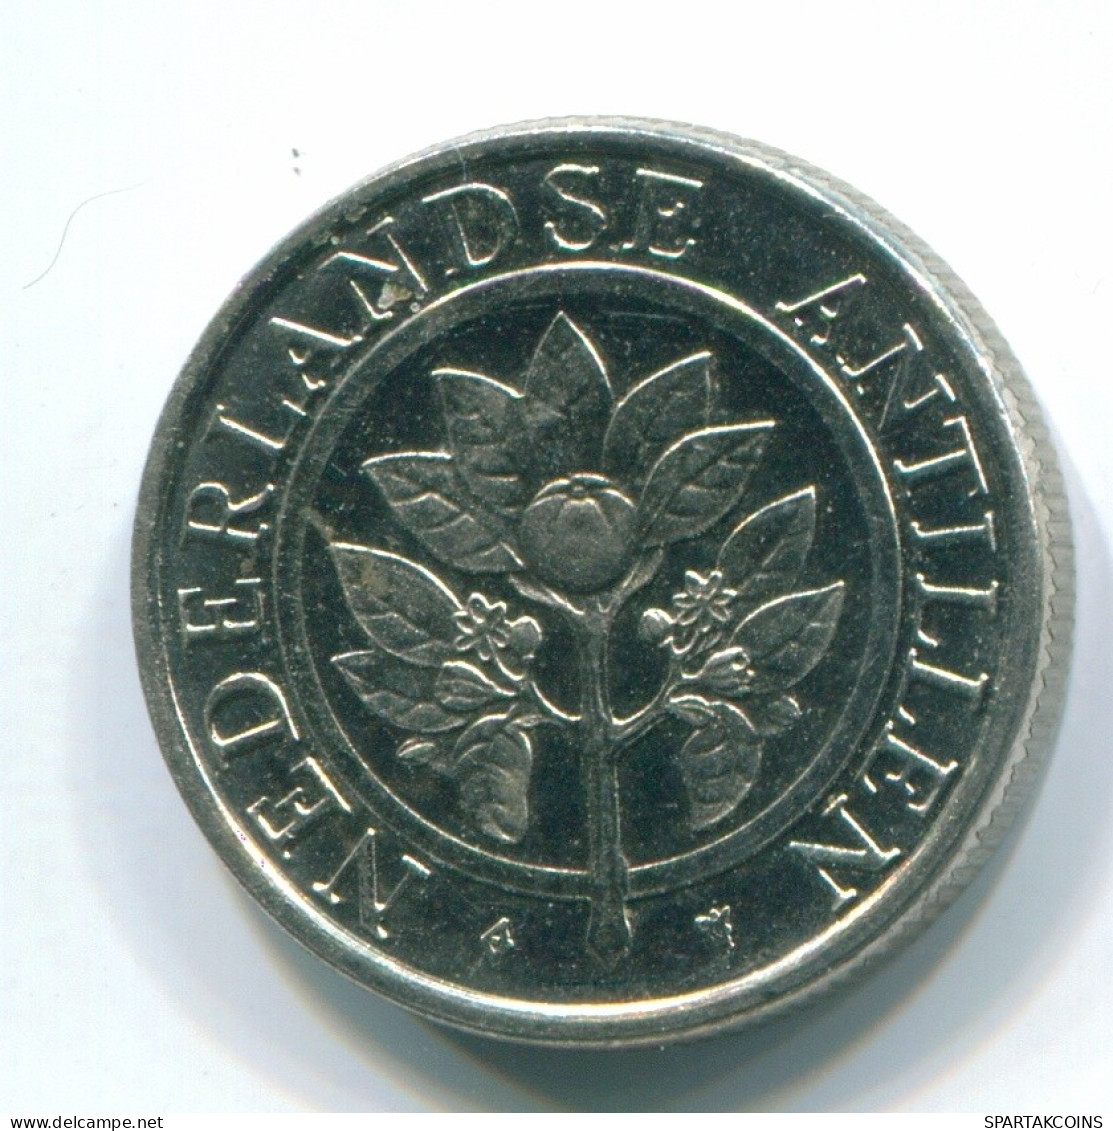 10 CENTS 1989 NETHERLANDS ANTILLES Nickel Colonial Coin #S11313.U.A - Antilles Néerlandaises